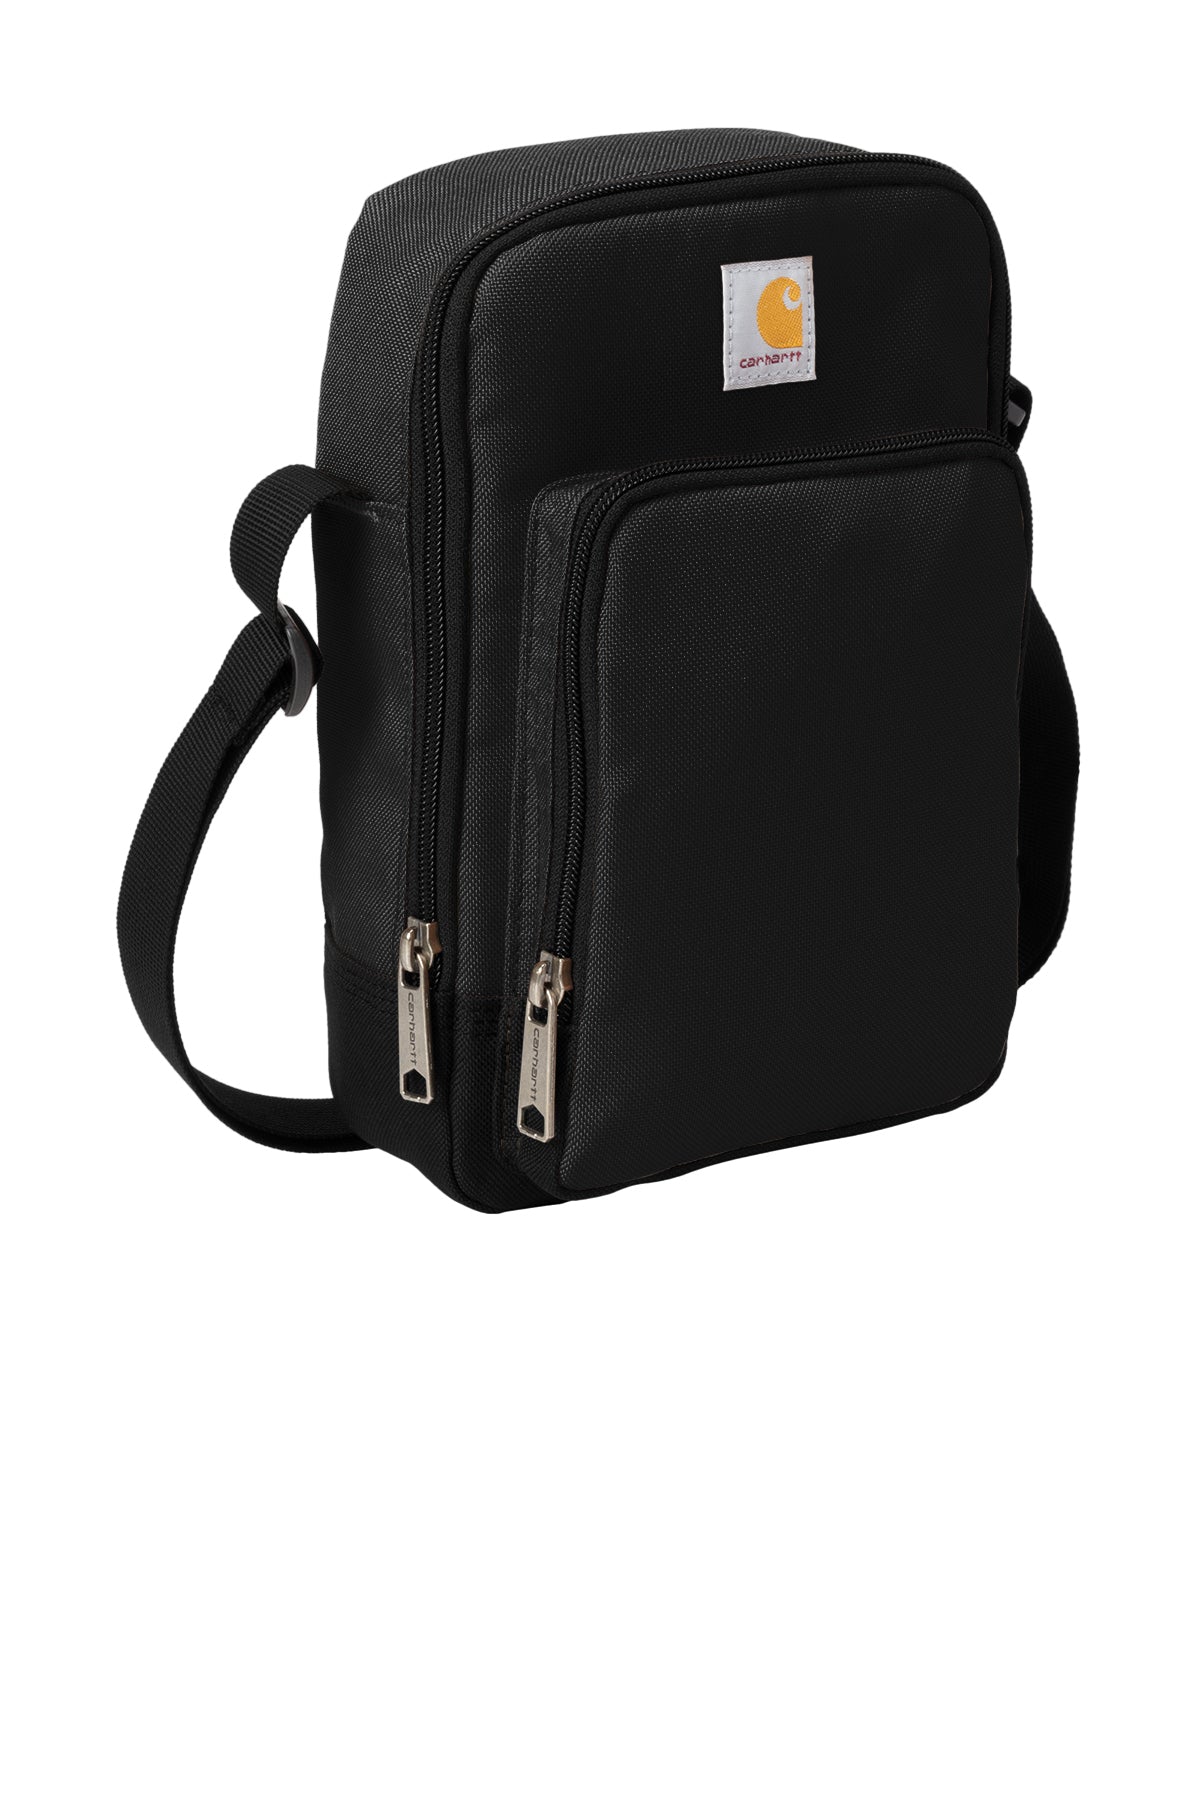 Carhartt Branded Crossbody Zip Bags, Black